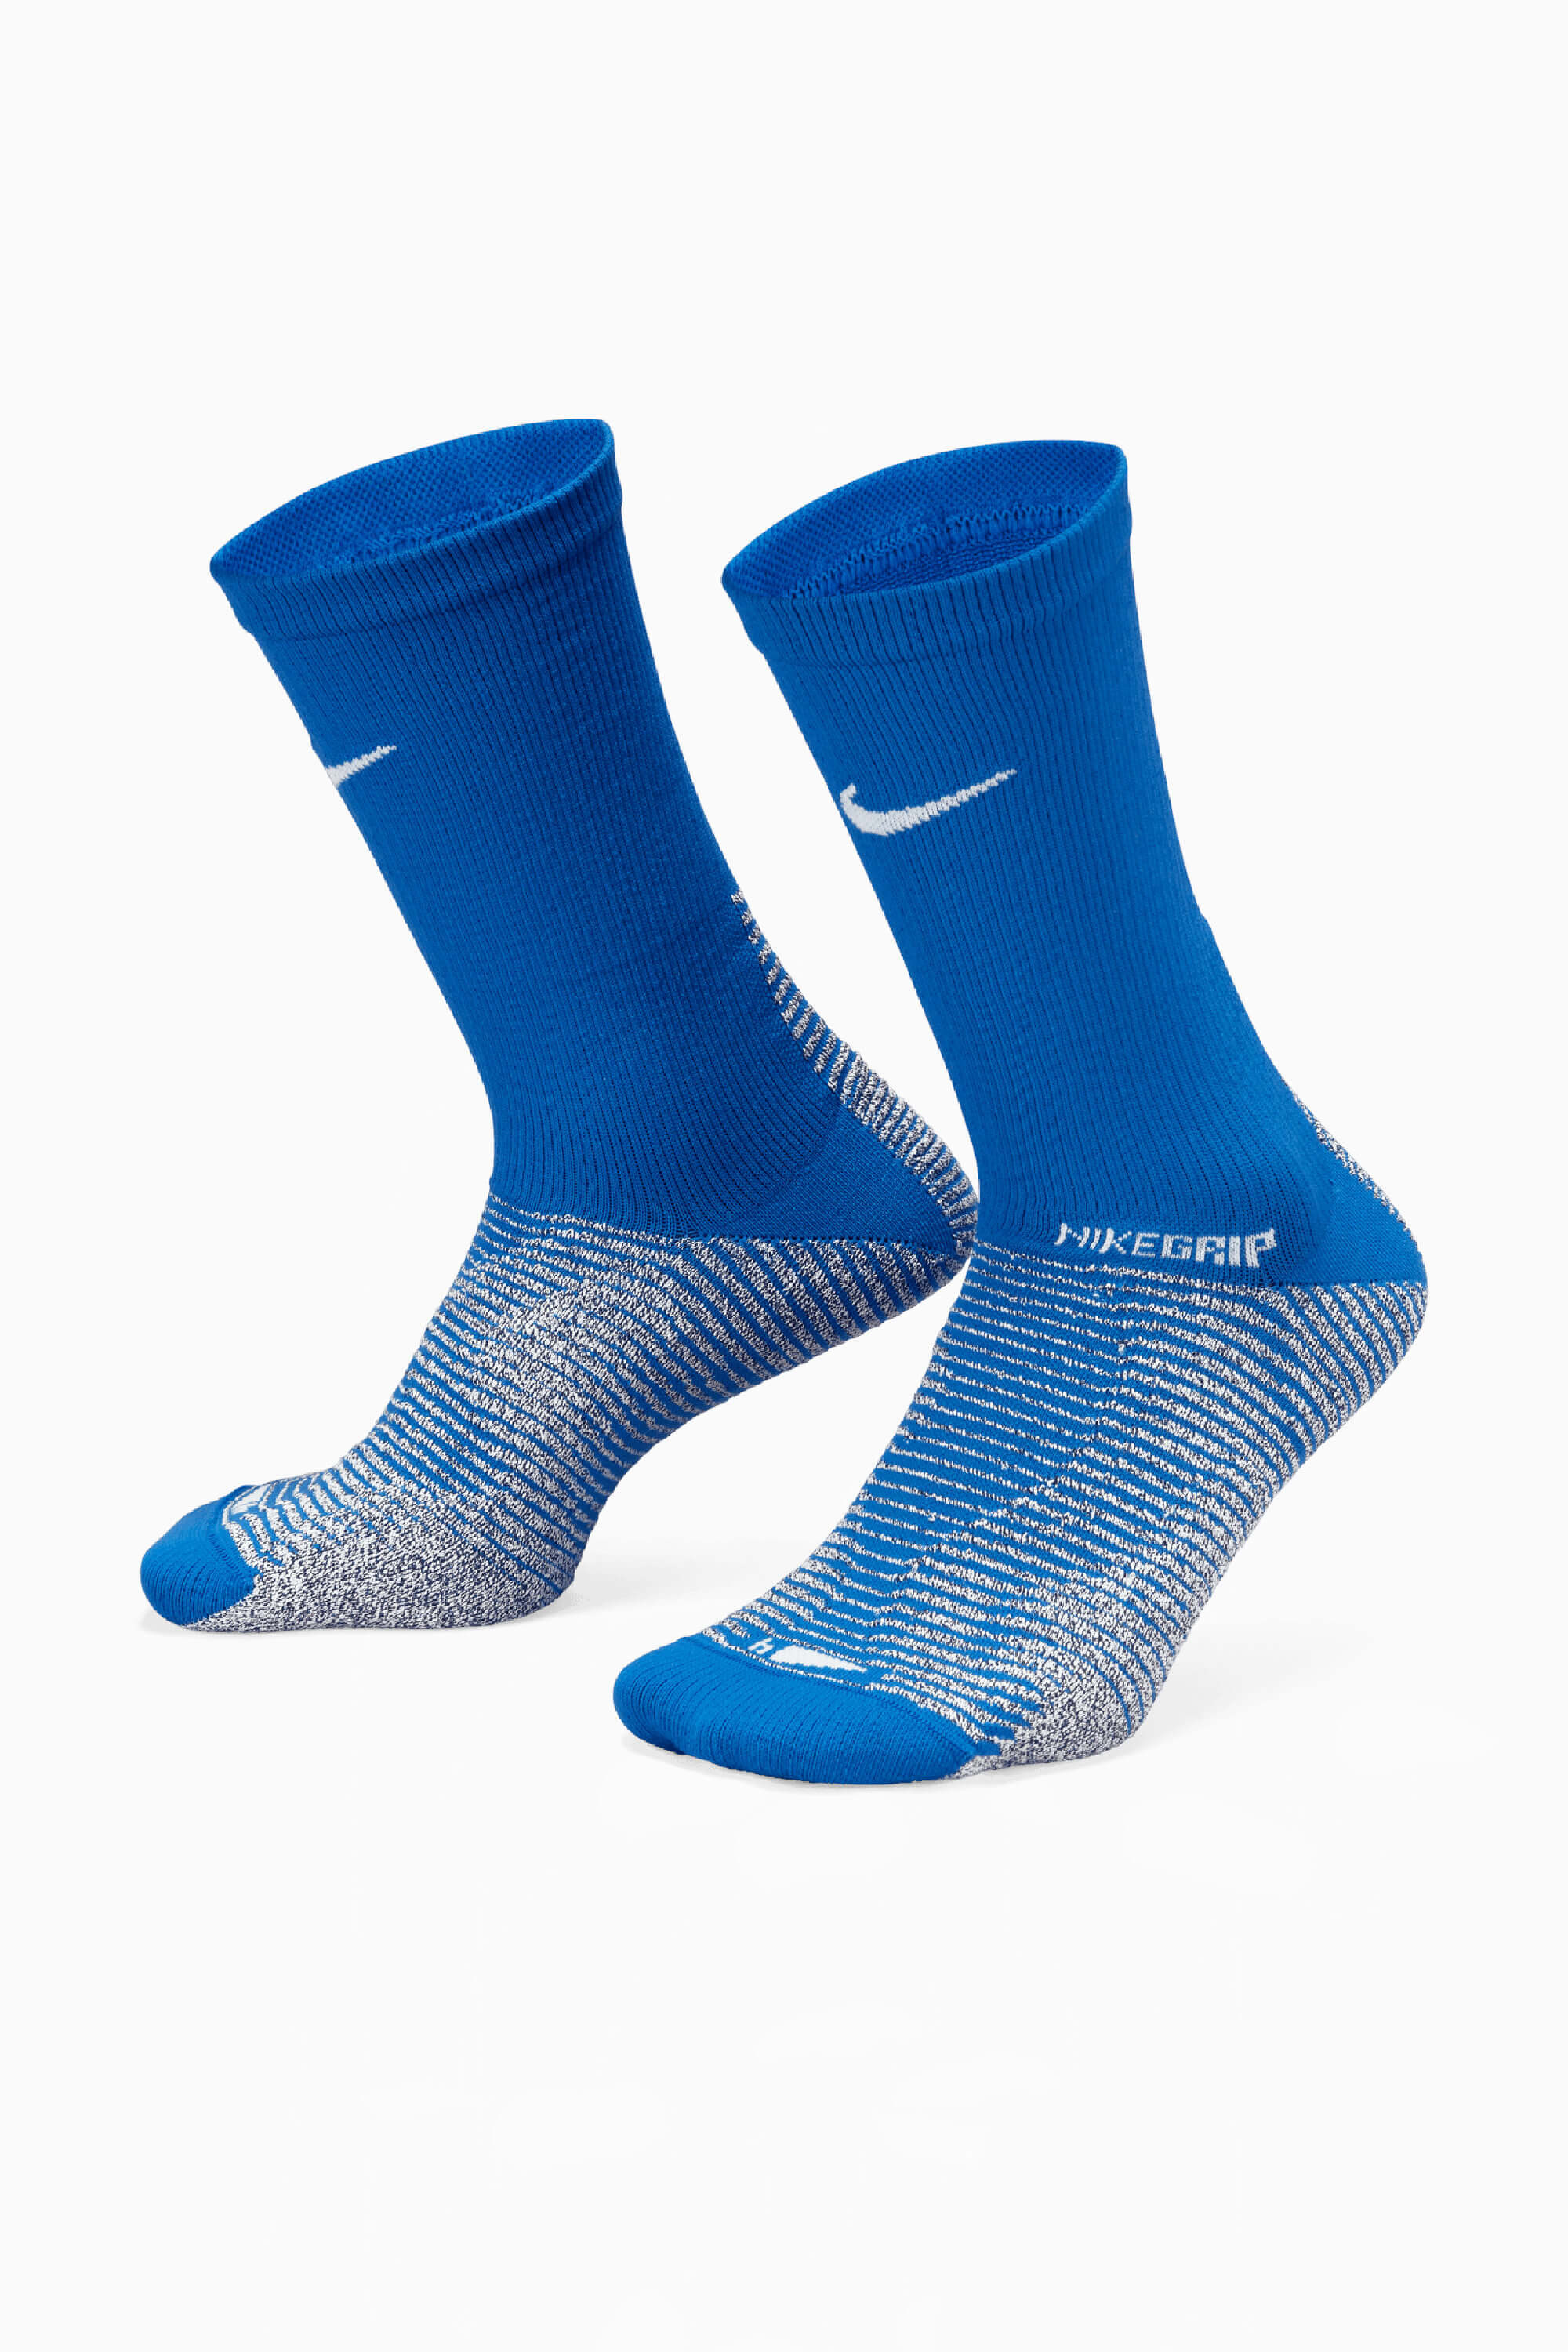 Nike NikeGrip Strike Socks Review 